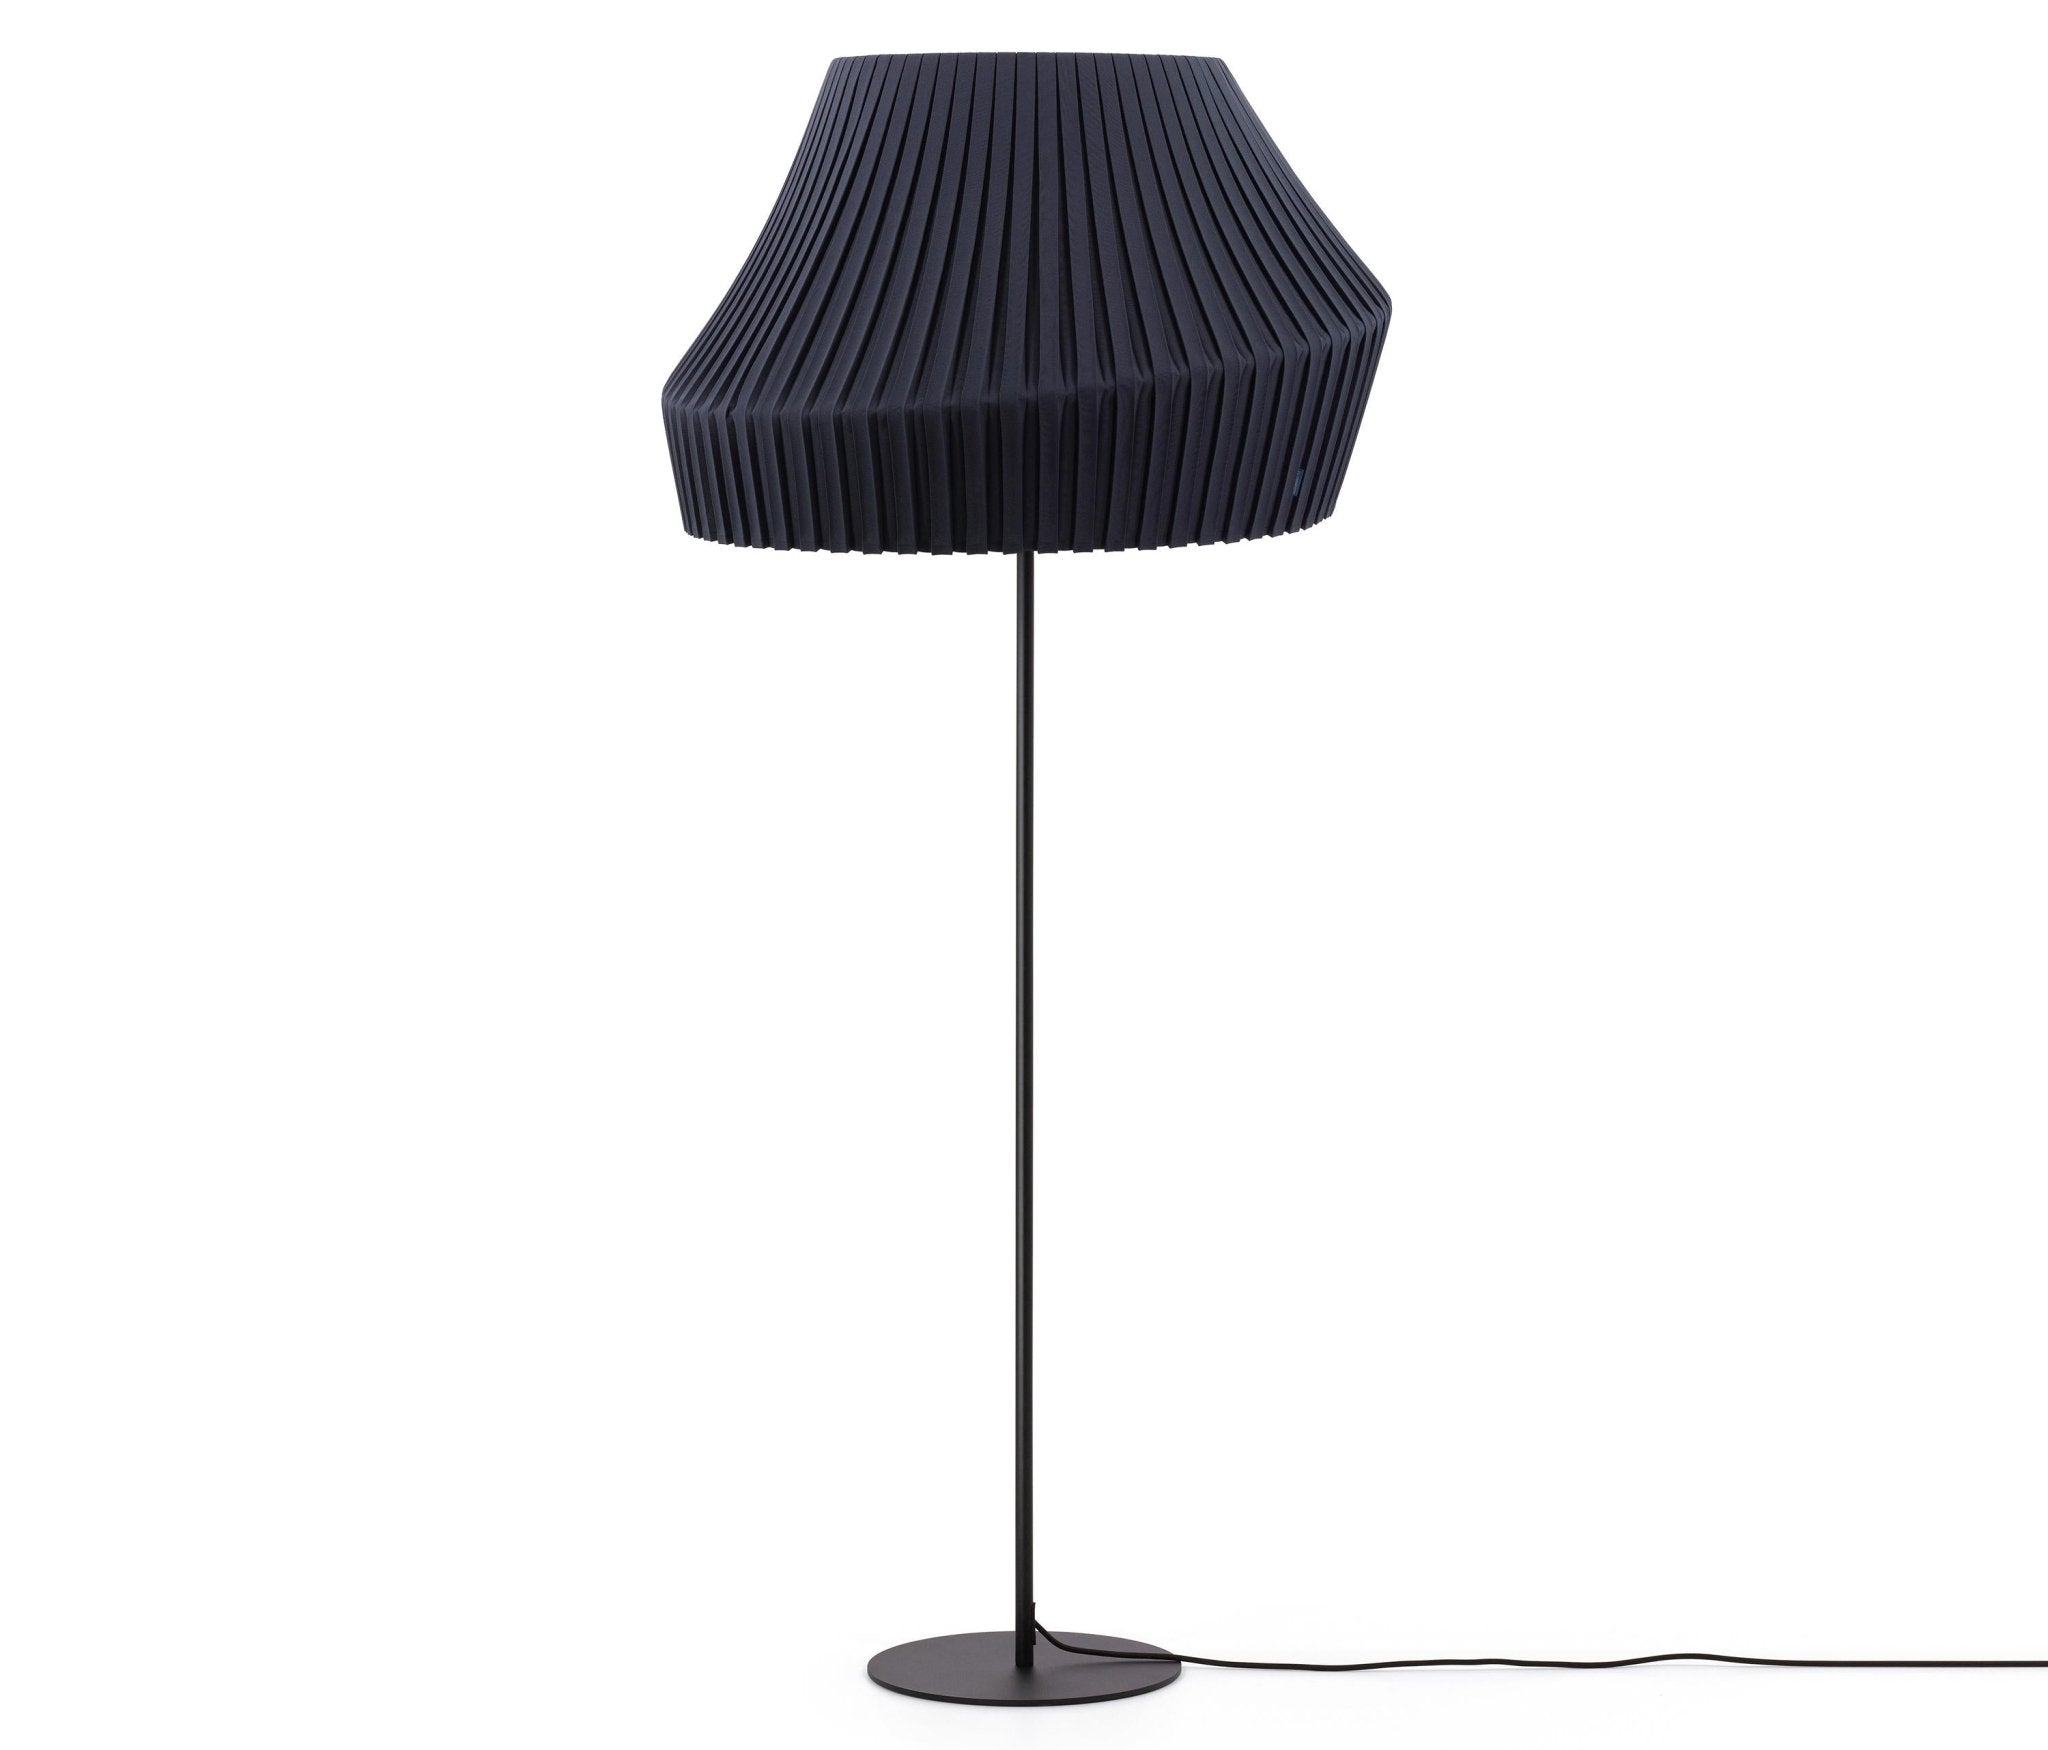 Hollands Licht - Pleat shade hanglamp / vloerlamp